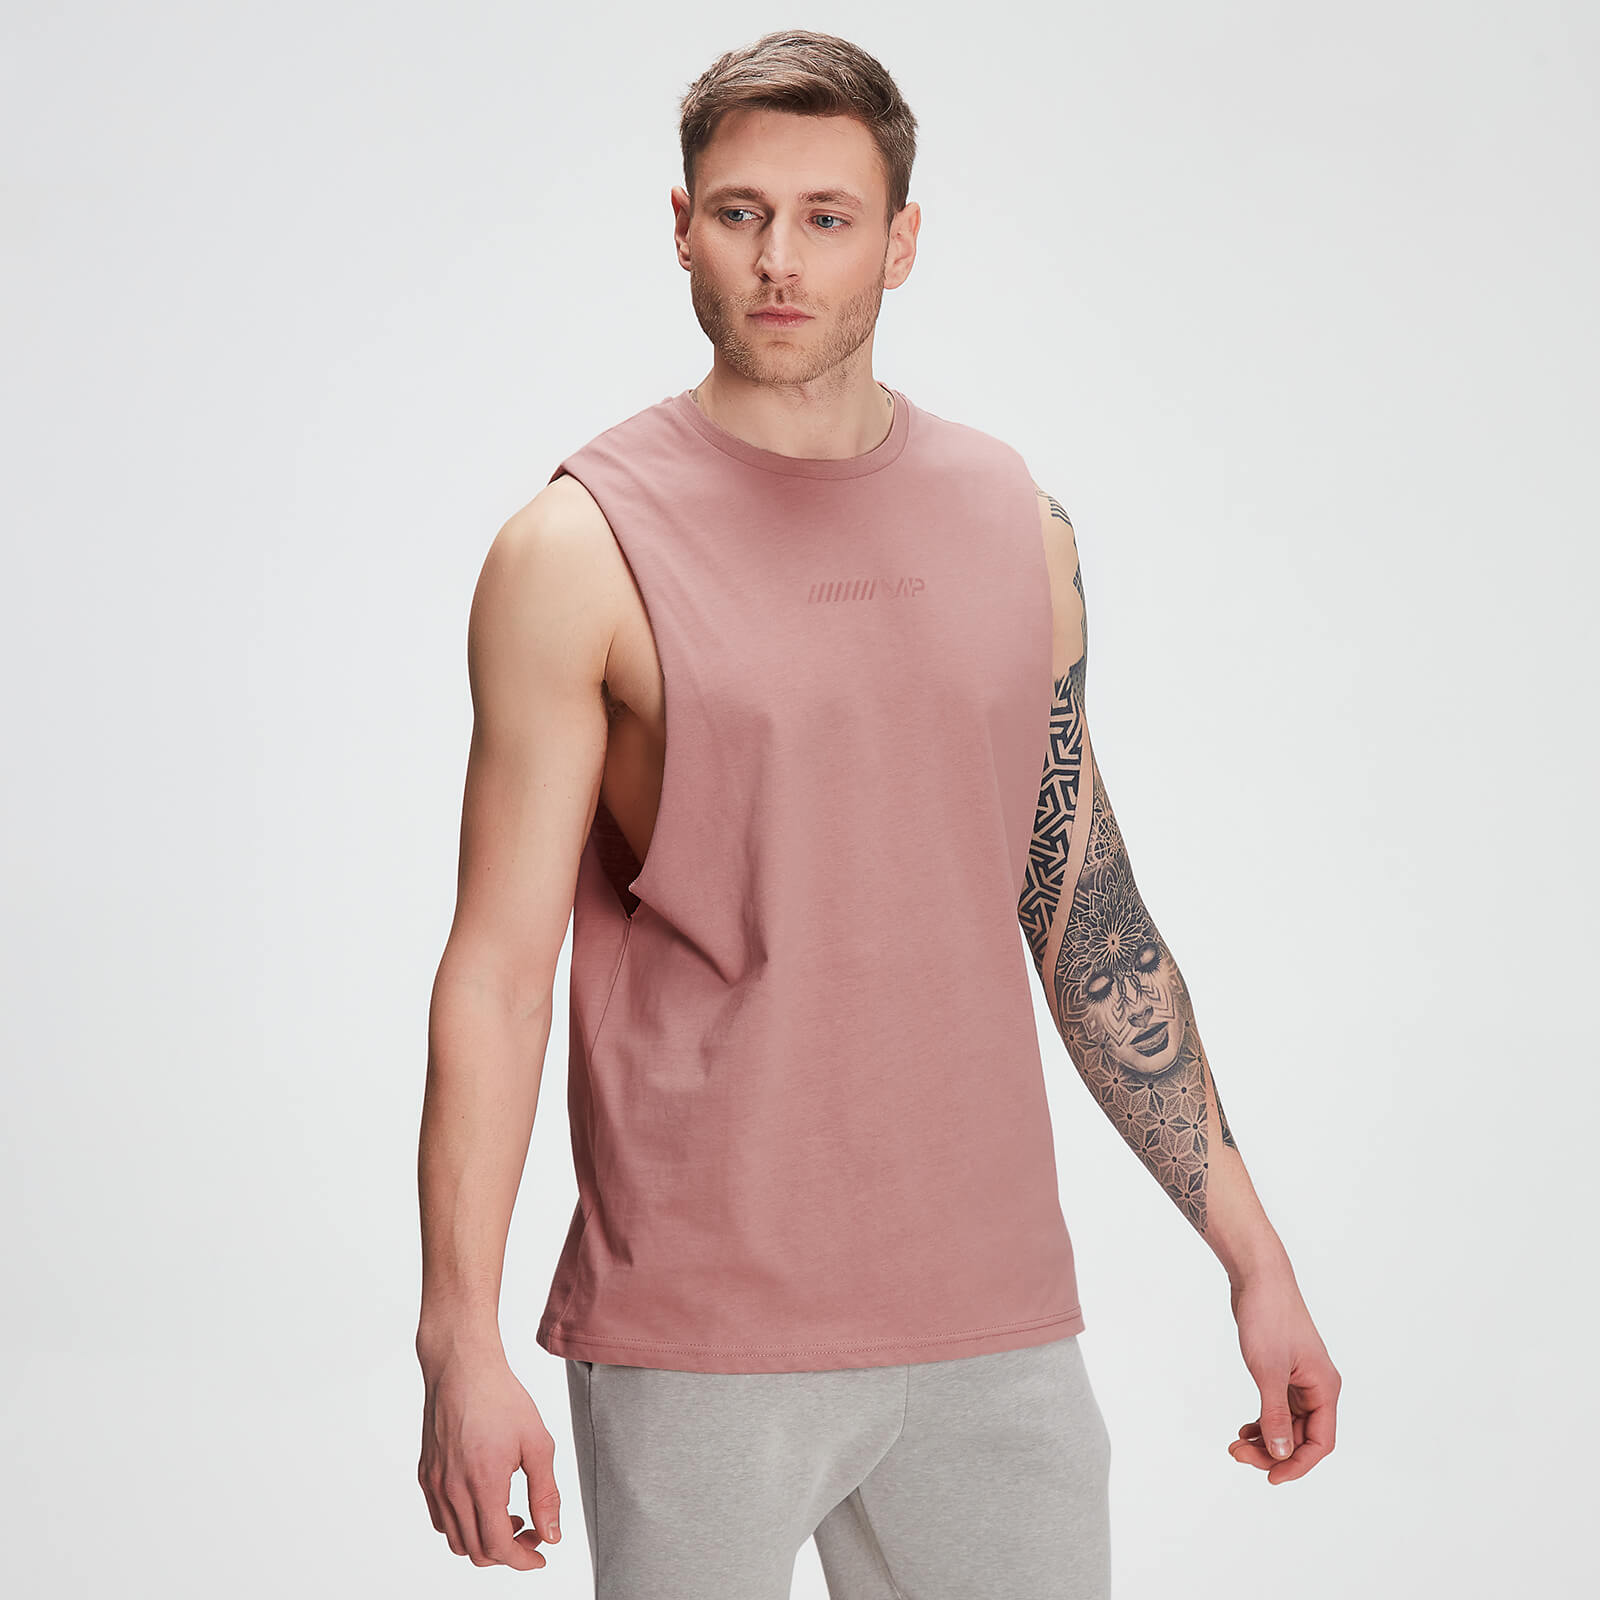 Mp Camiseta sin mangas Tonal Graphic para hombre de  - Rosa lavado - L